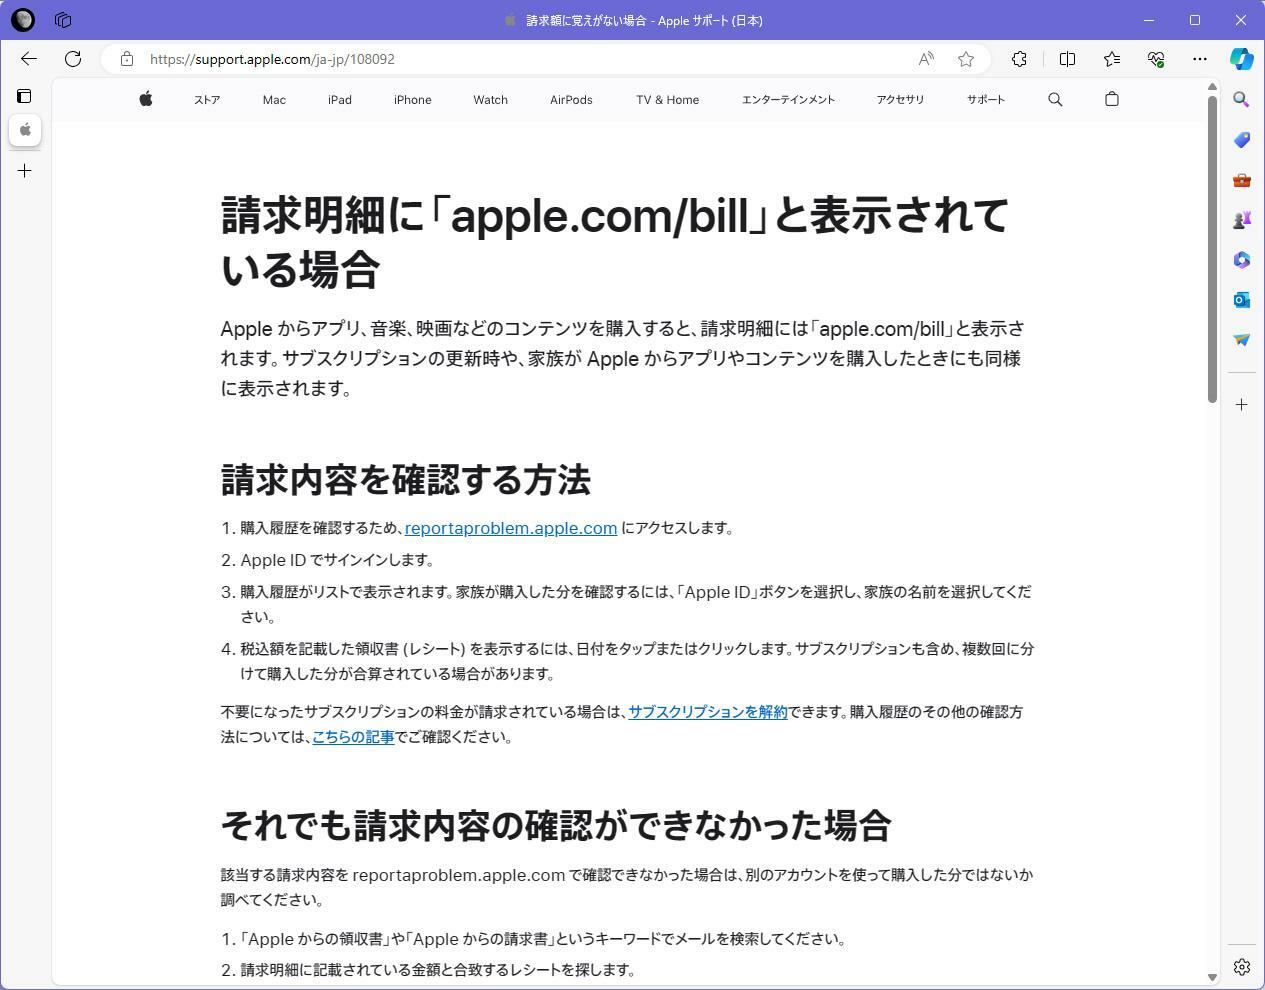 https://support.apple.com/ja-jp/108092